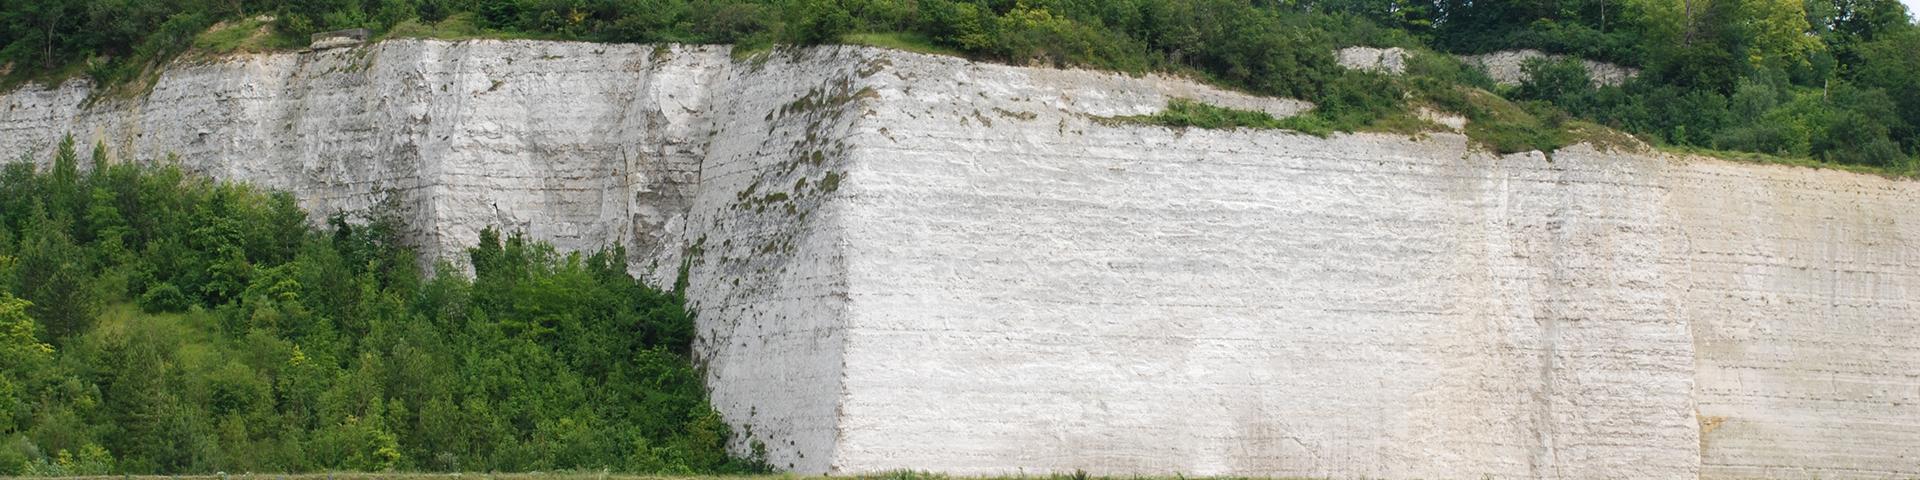 Lafarge chalk quarry, Yvelines